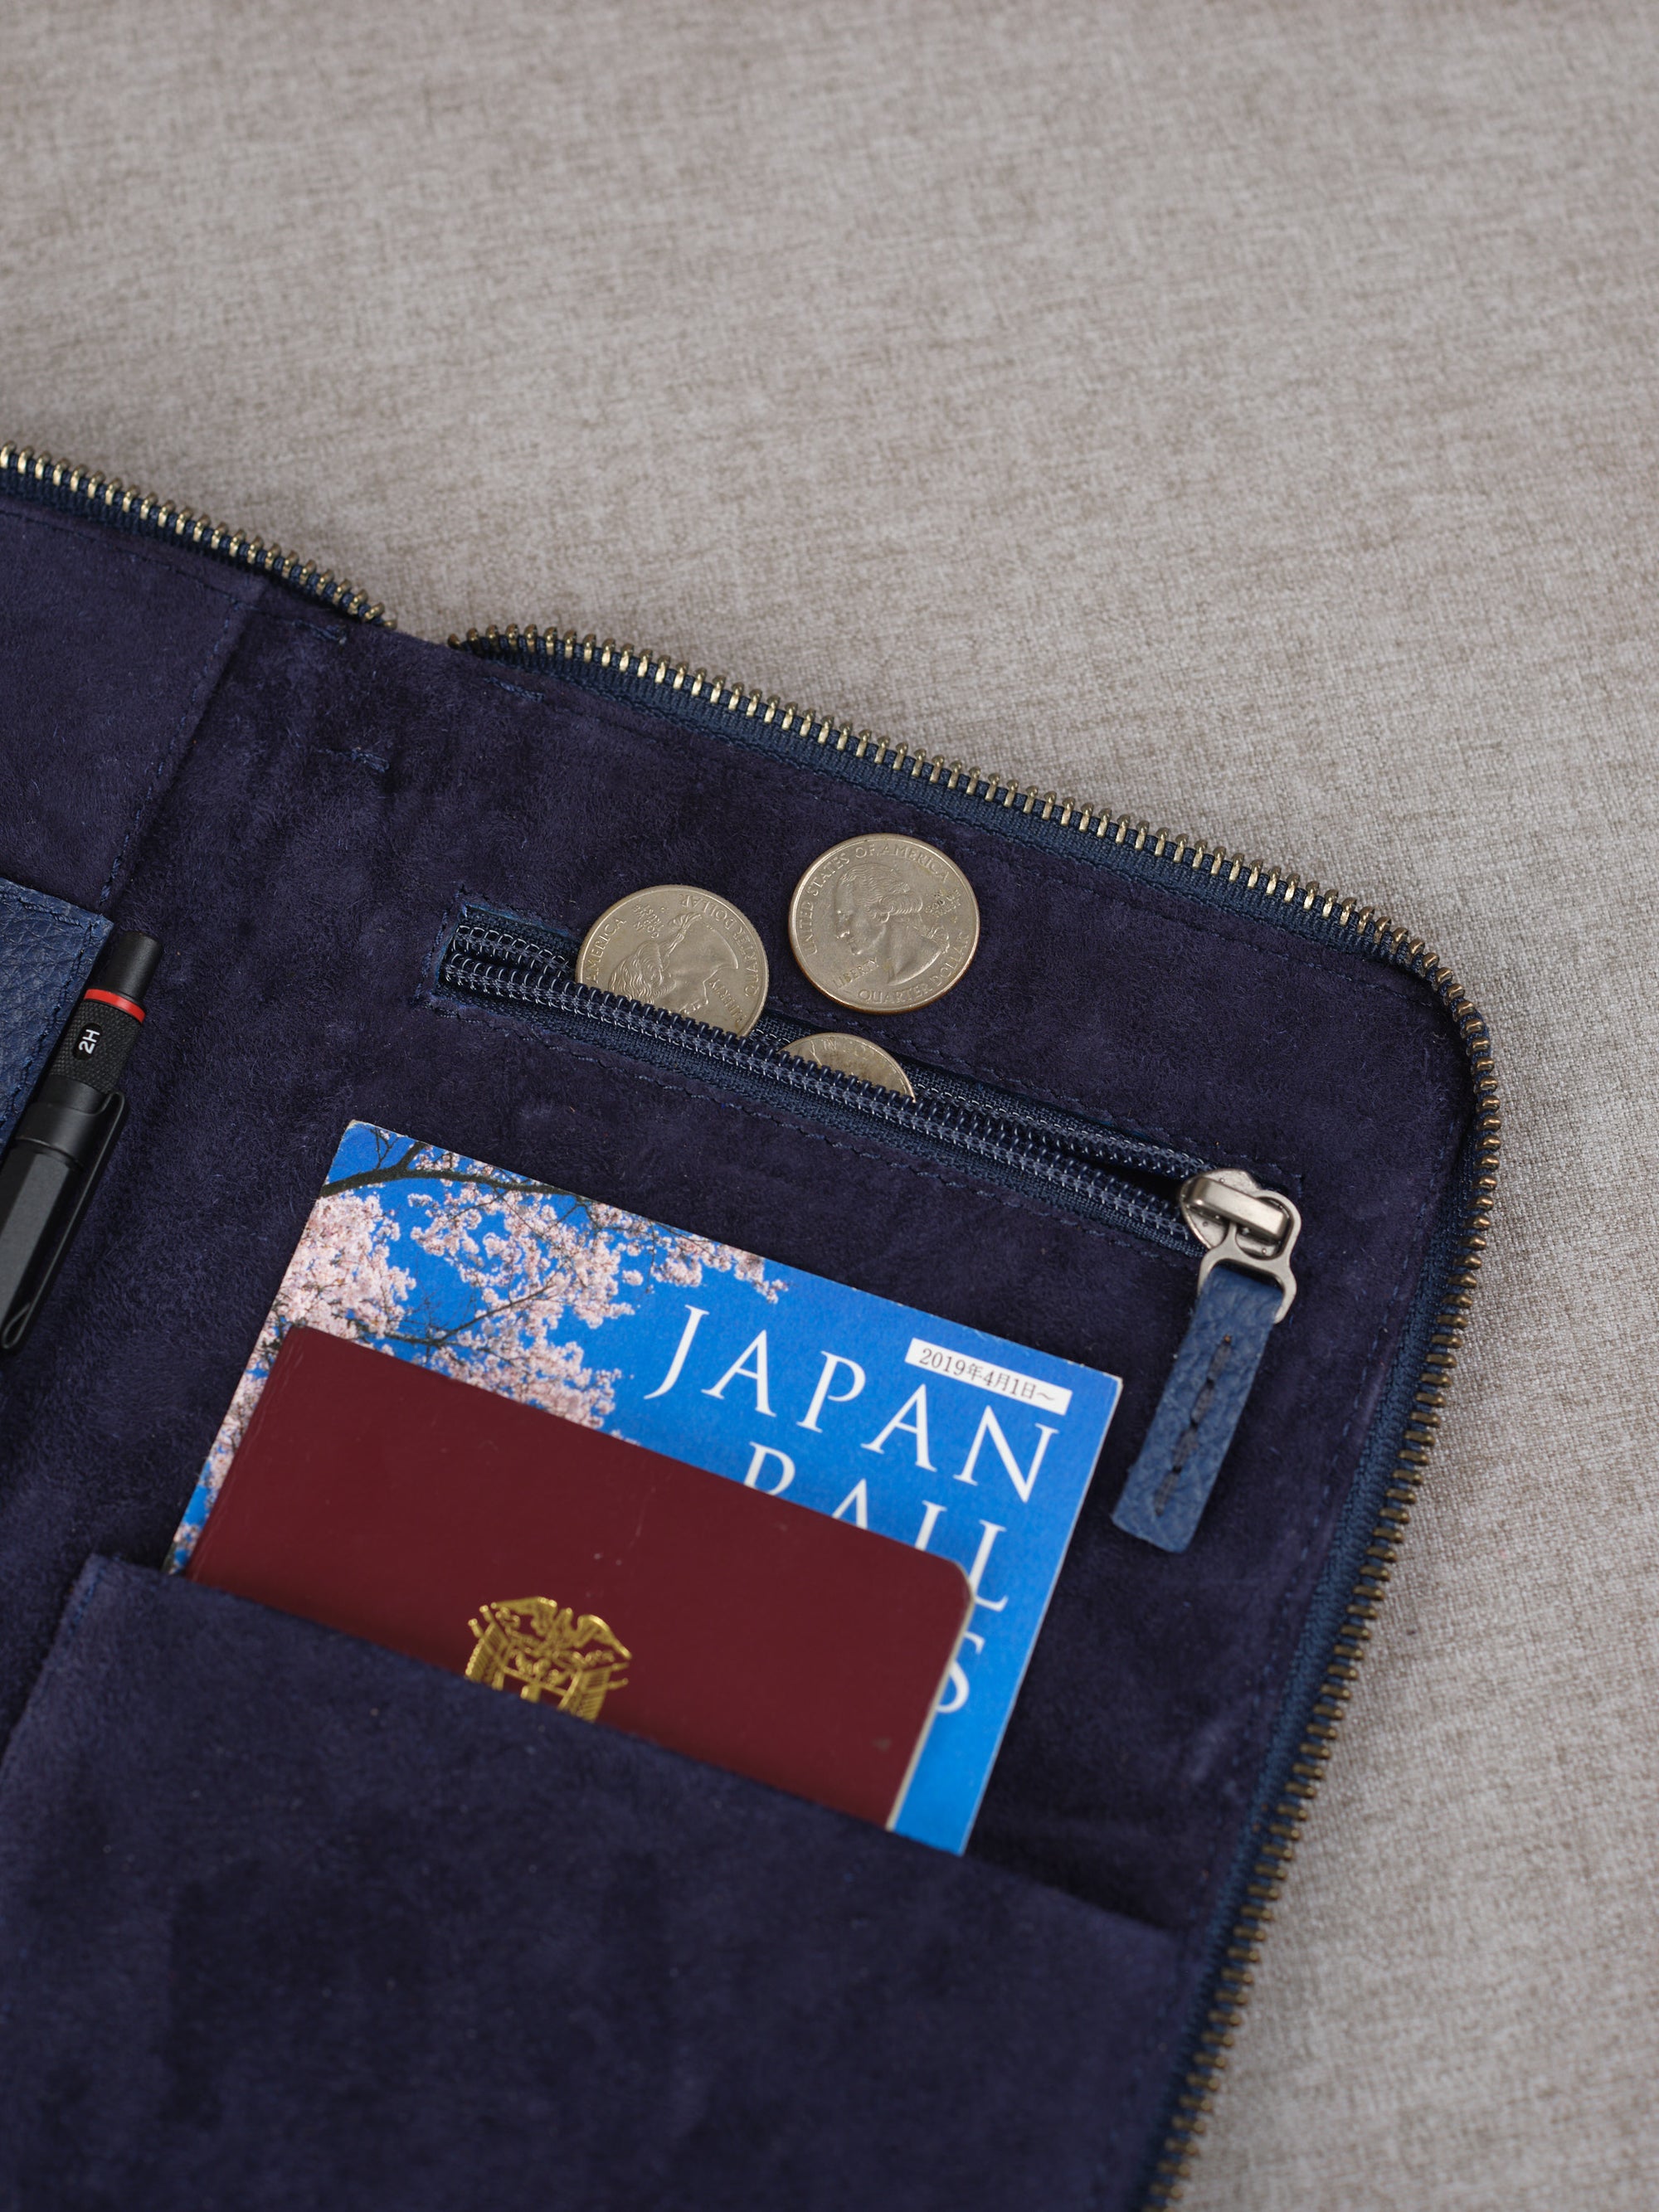 Mens passport holder navy blue by Capra Leather